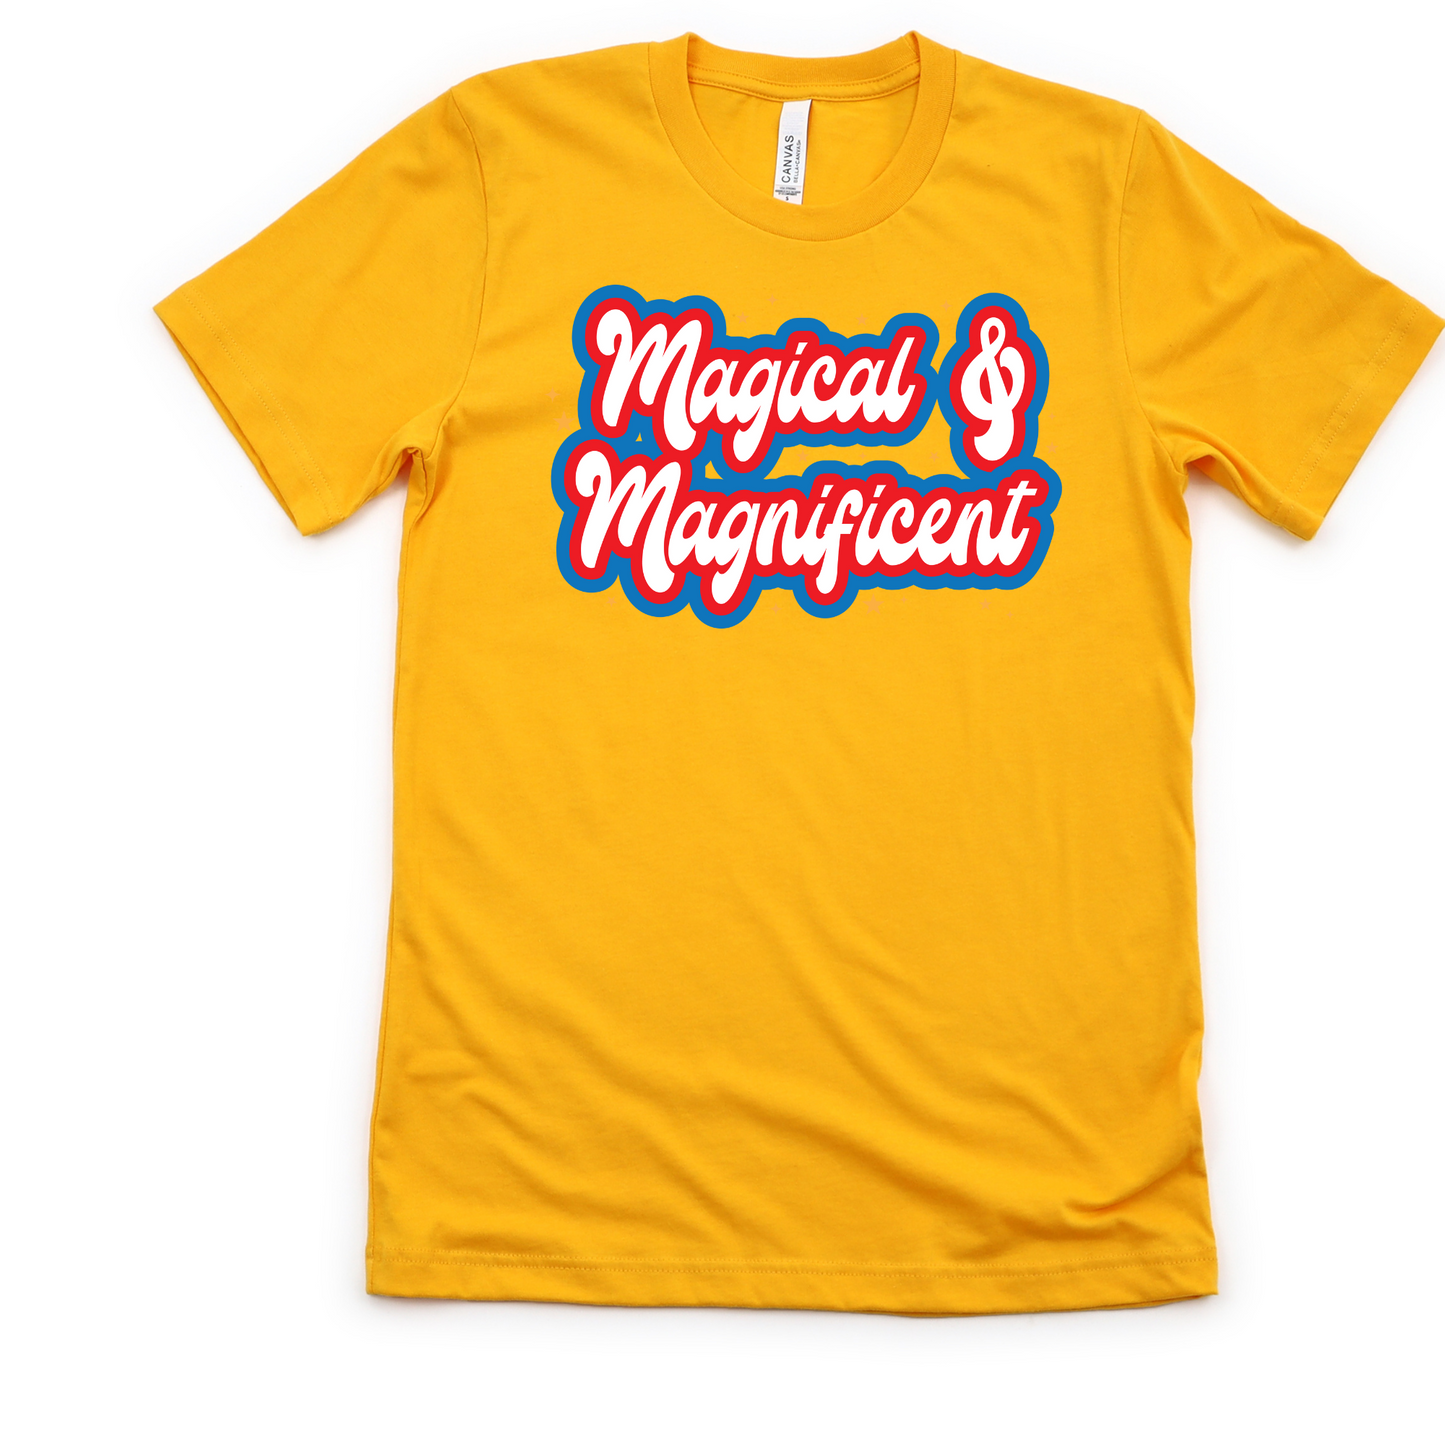 Magical & Magnificent Unisex T-shirt